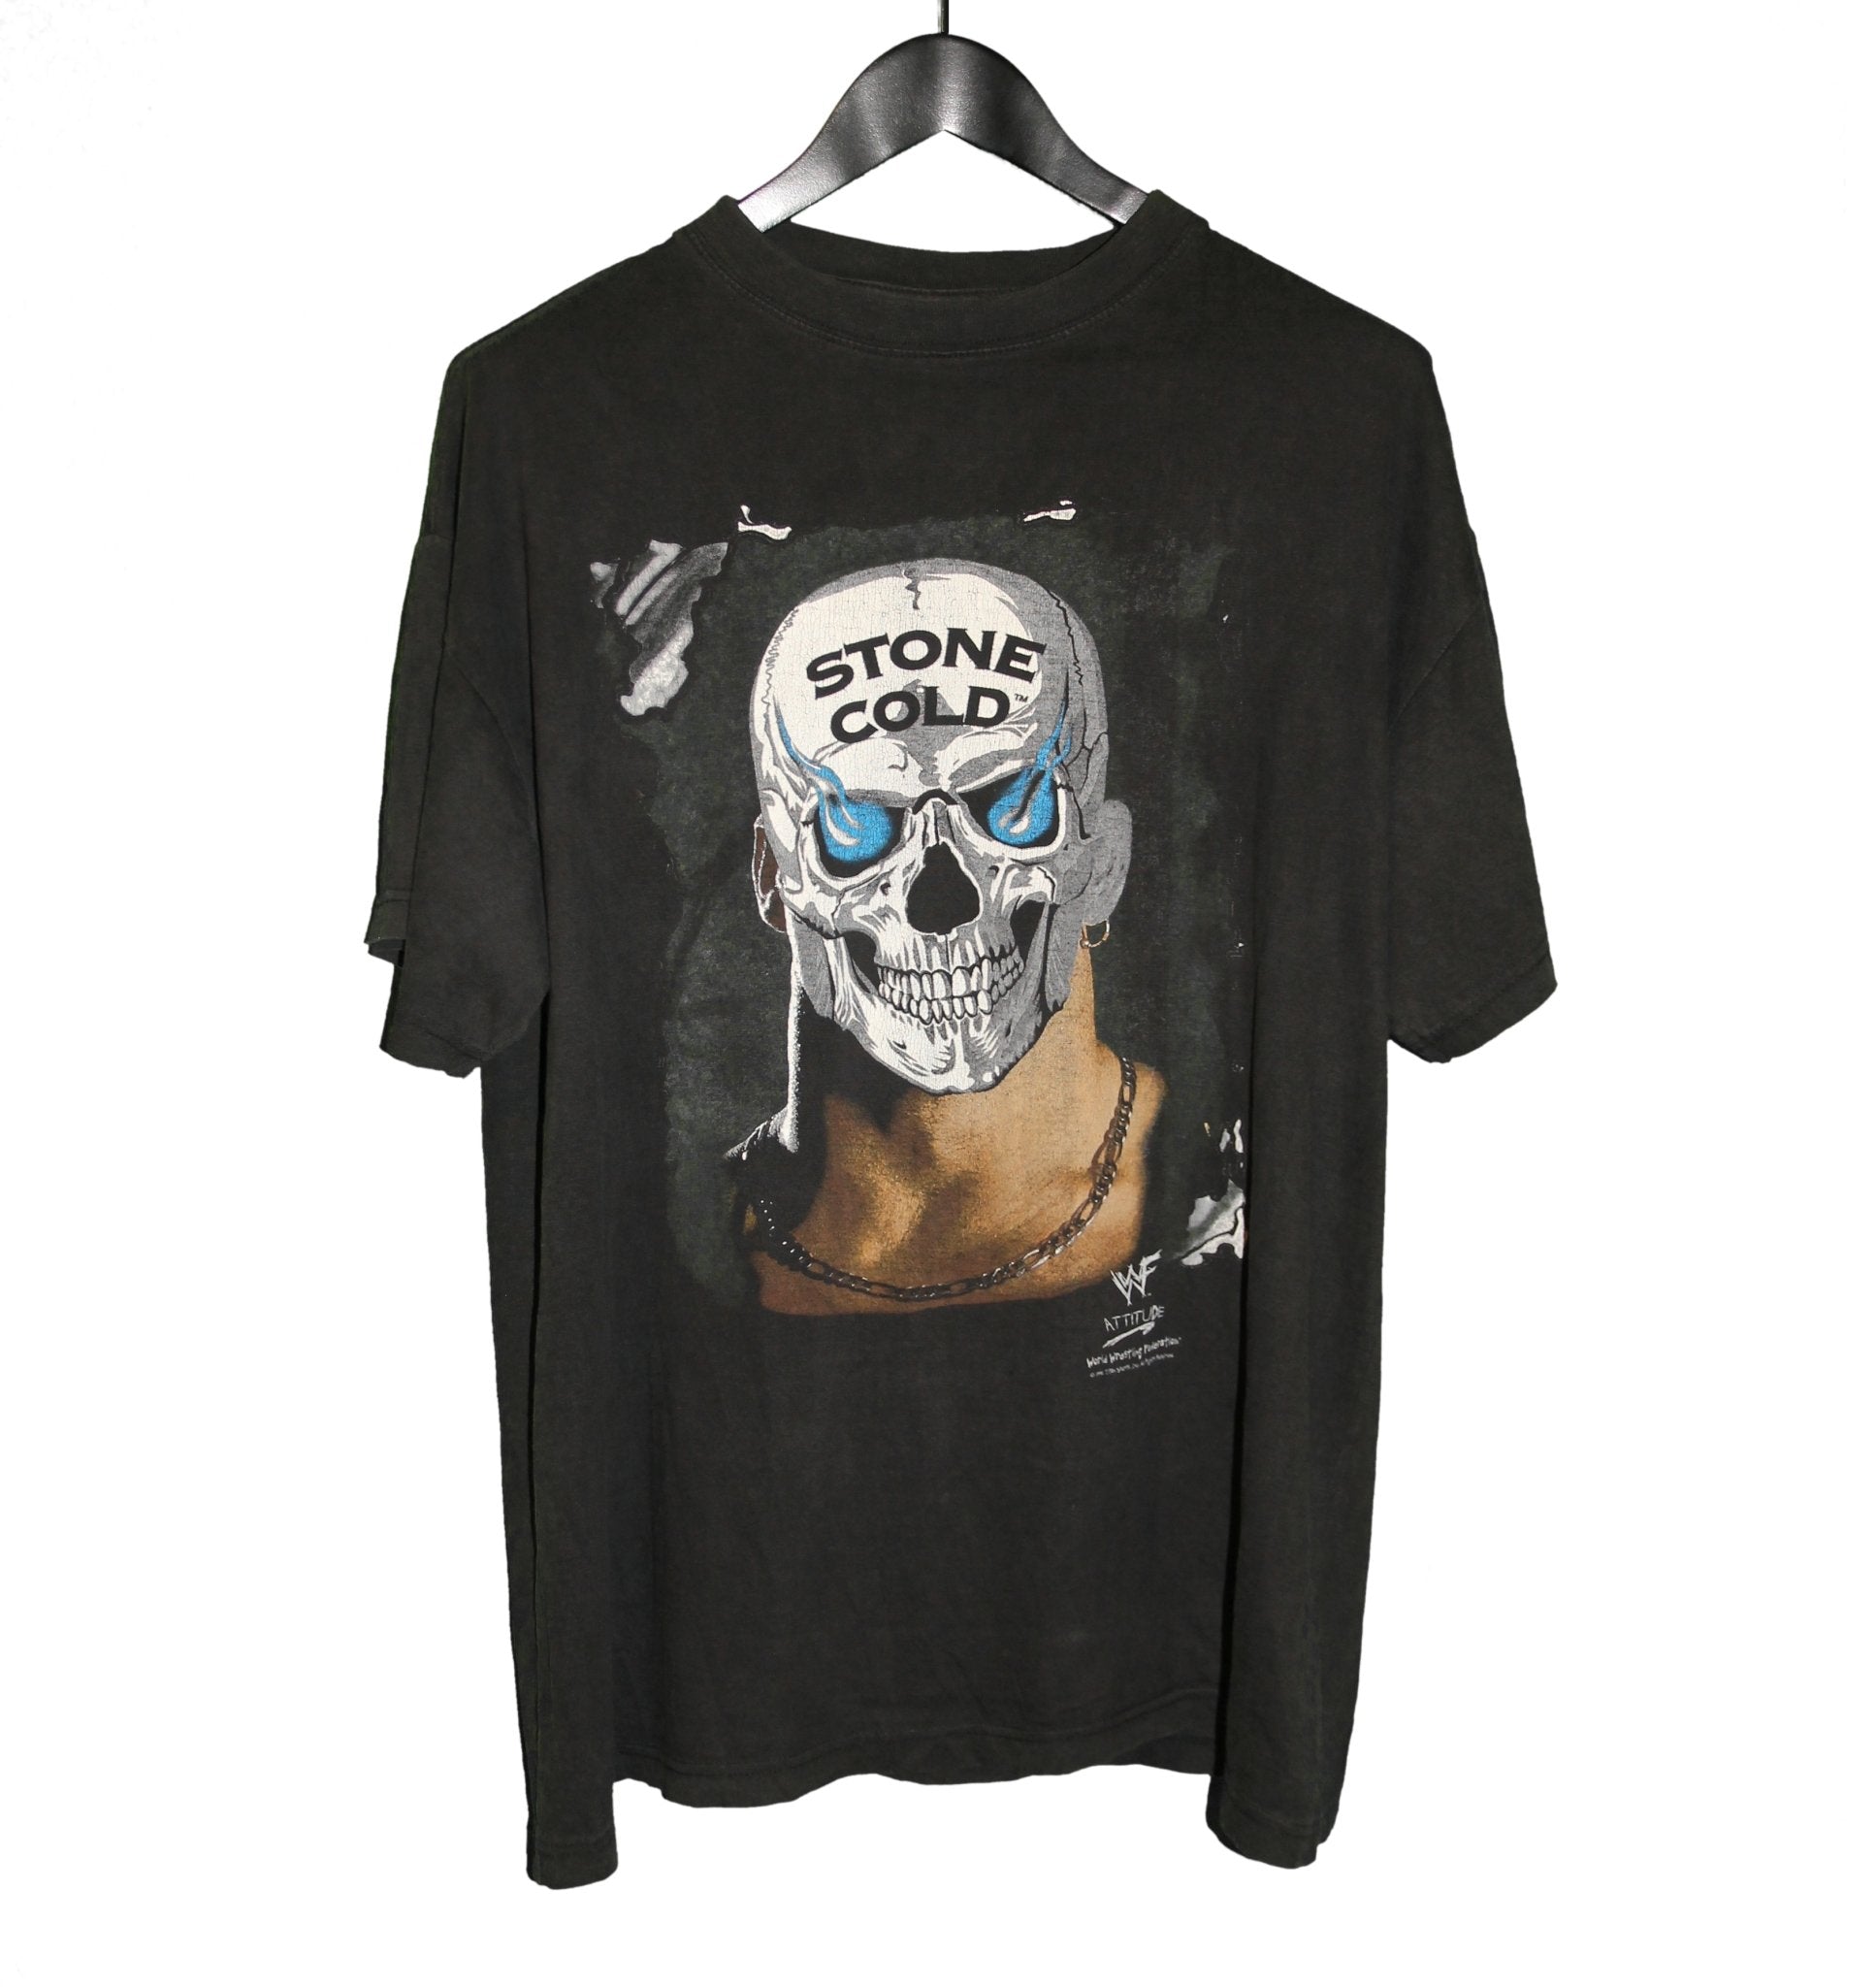 1998 Stone Cold Steve Austin Shirt - Faded AU